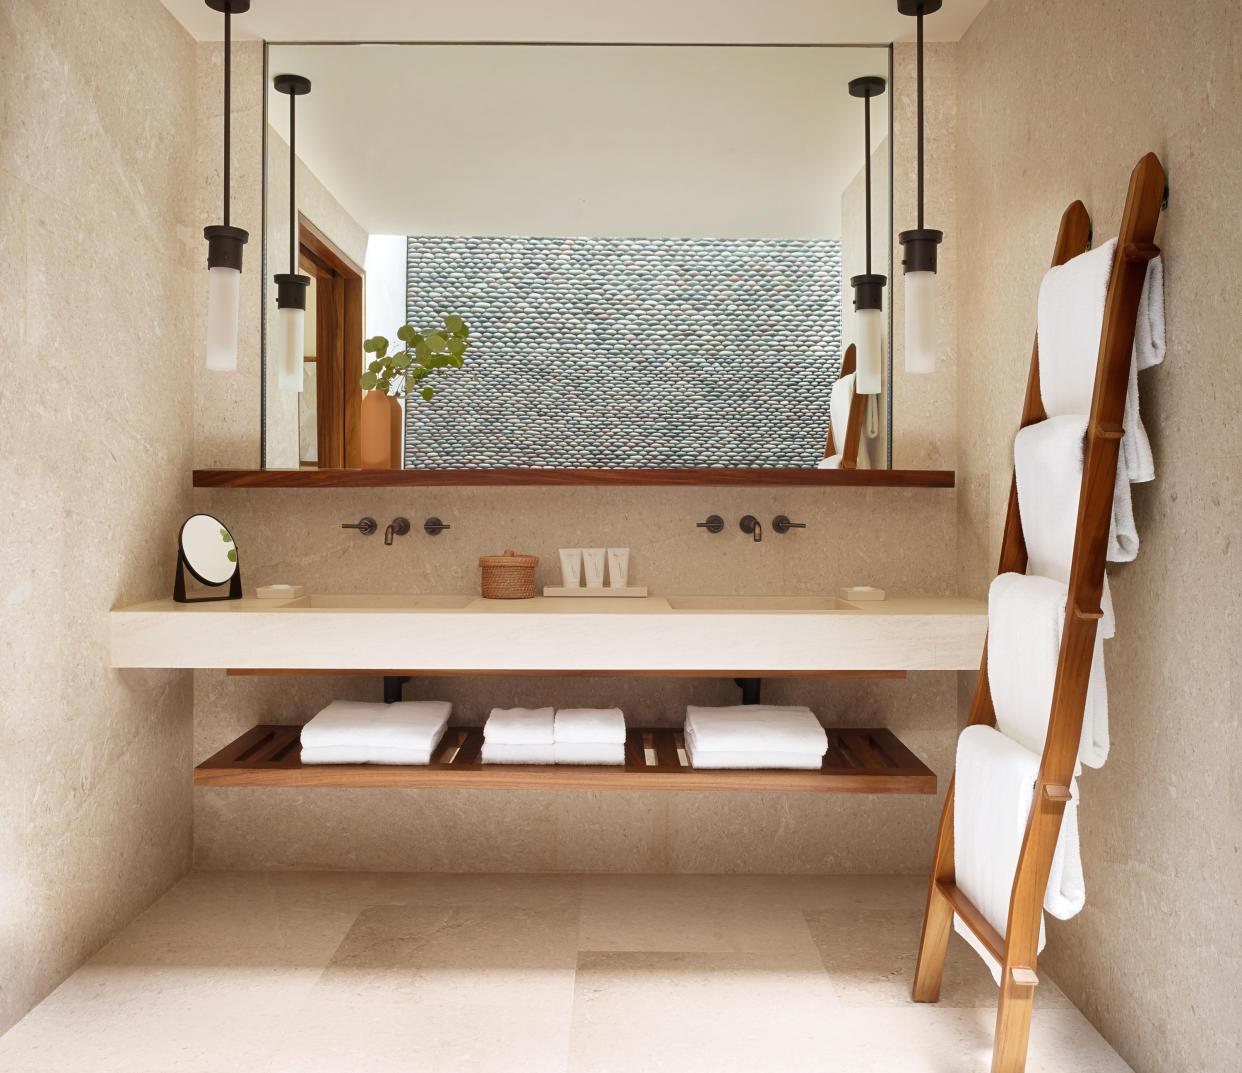  A bathroom floating shelf with neatly folded towels. 